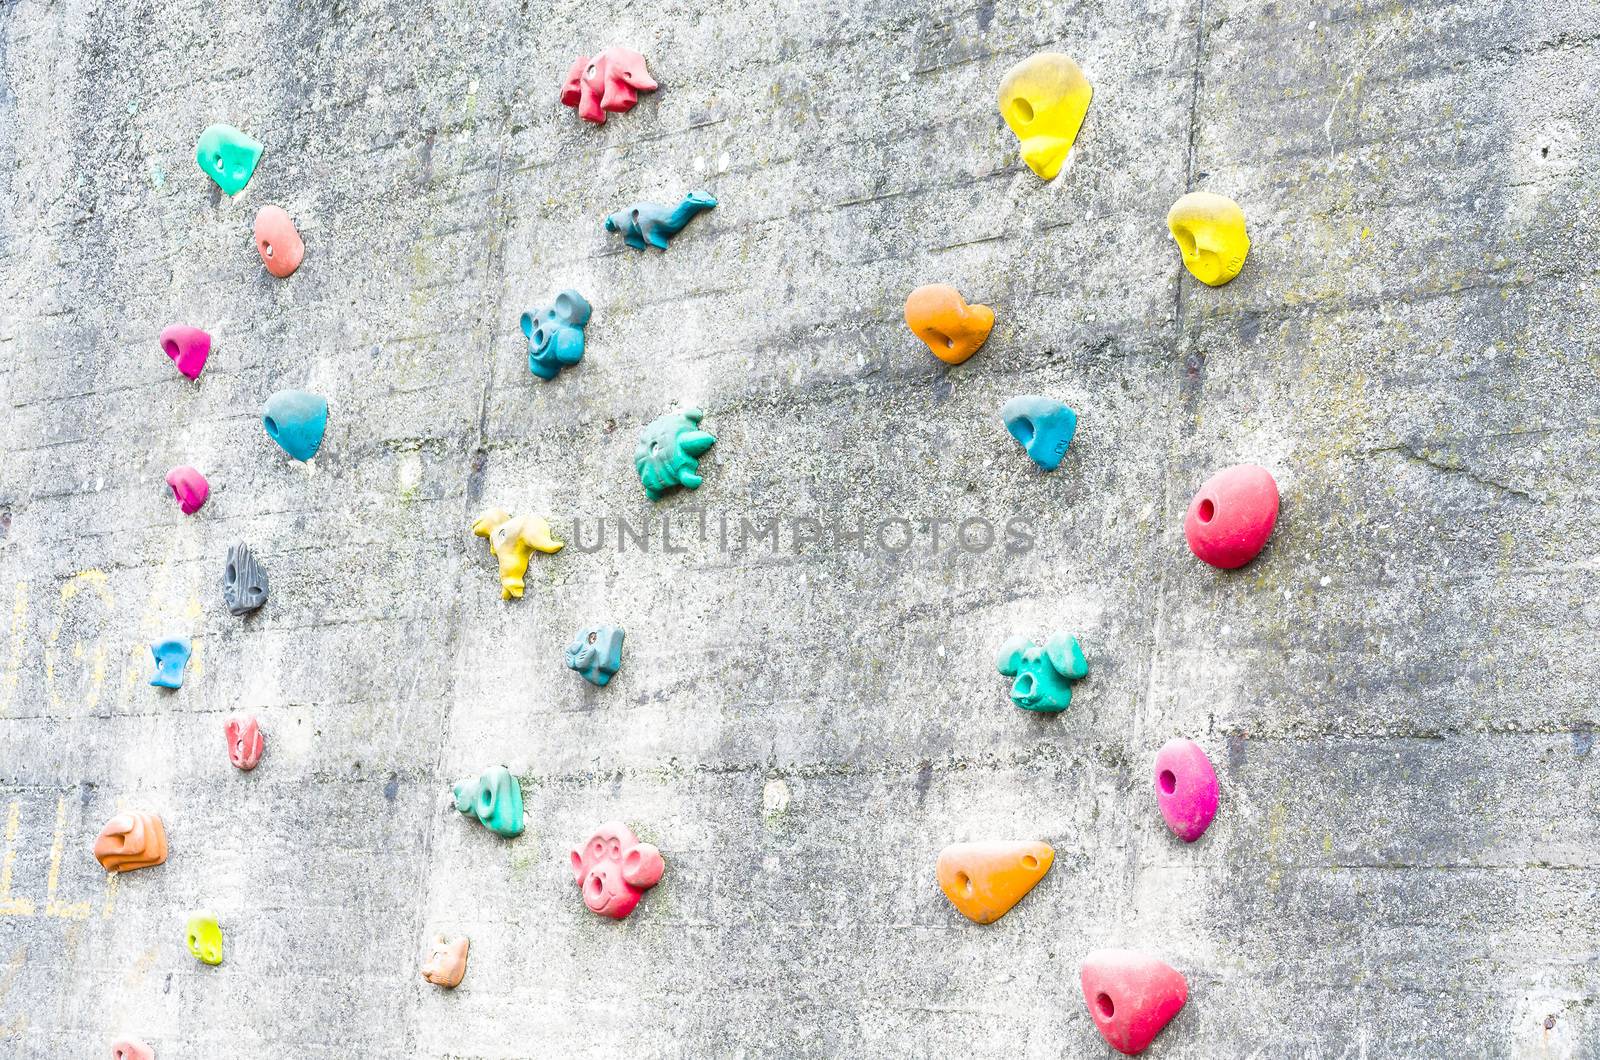 Detail climbing wall at an amusement park with climbing aids.